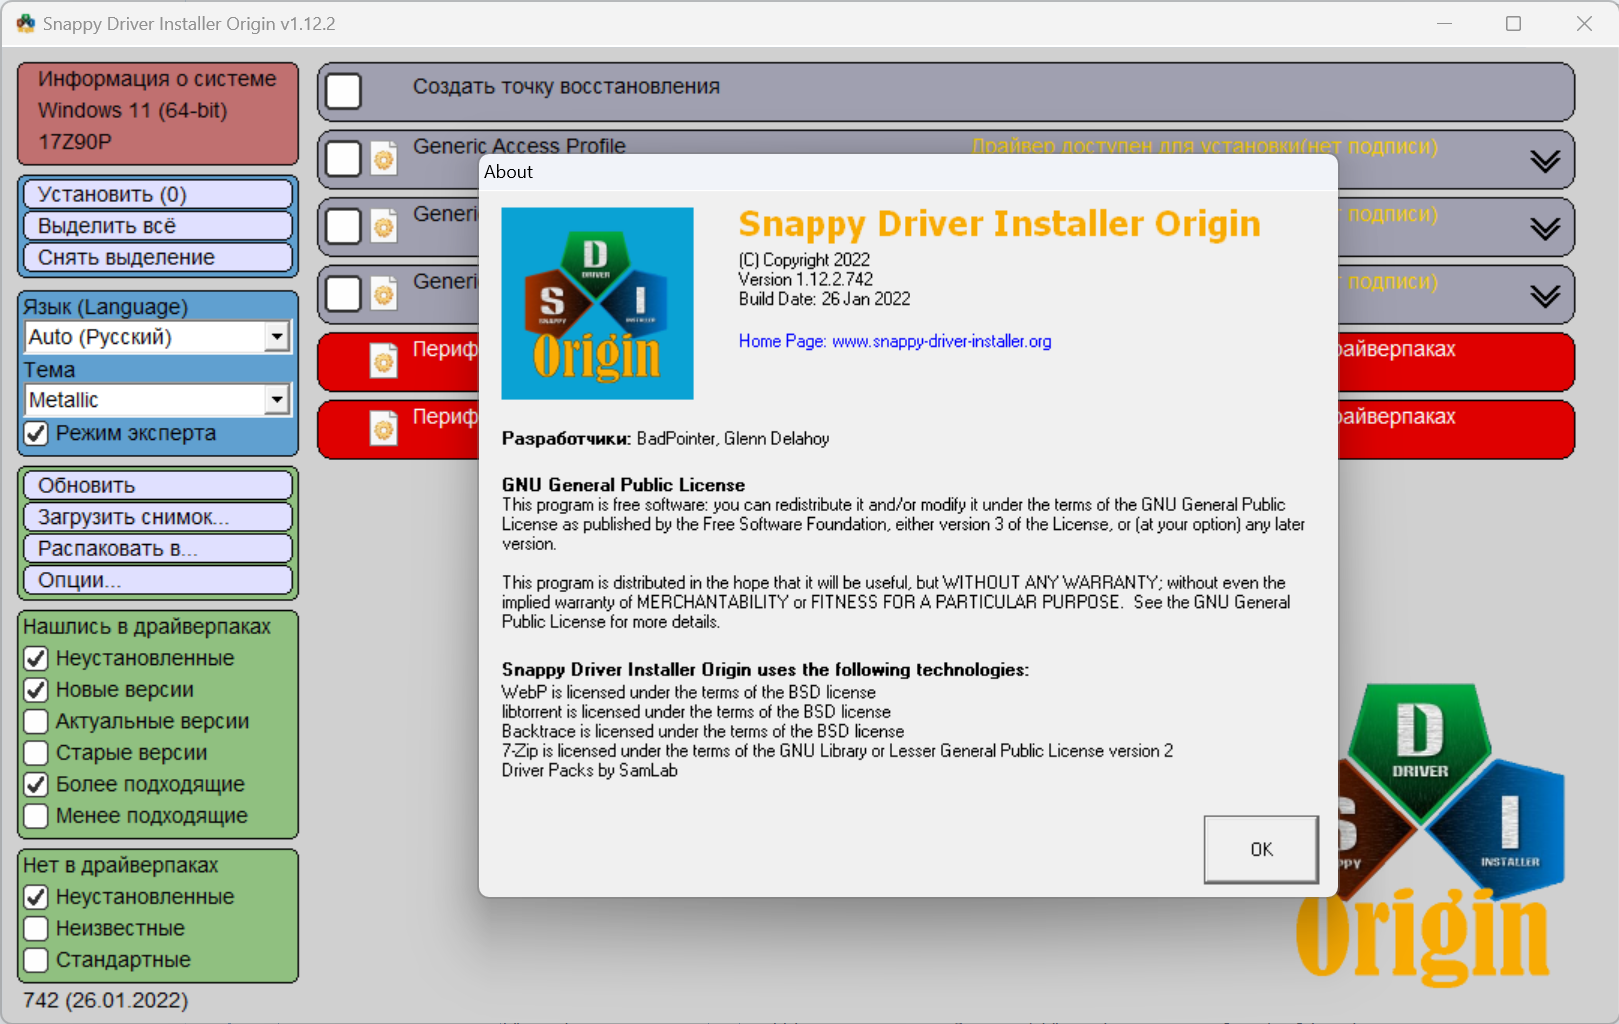 Snappy Driver Installer Origin R742 / Драйверпаки 22.03.3 [Multi/Ru]